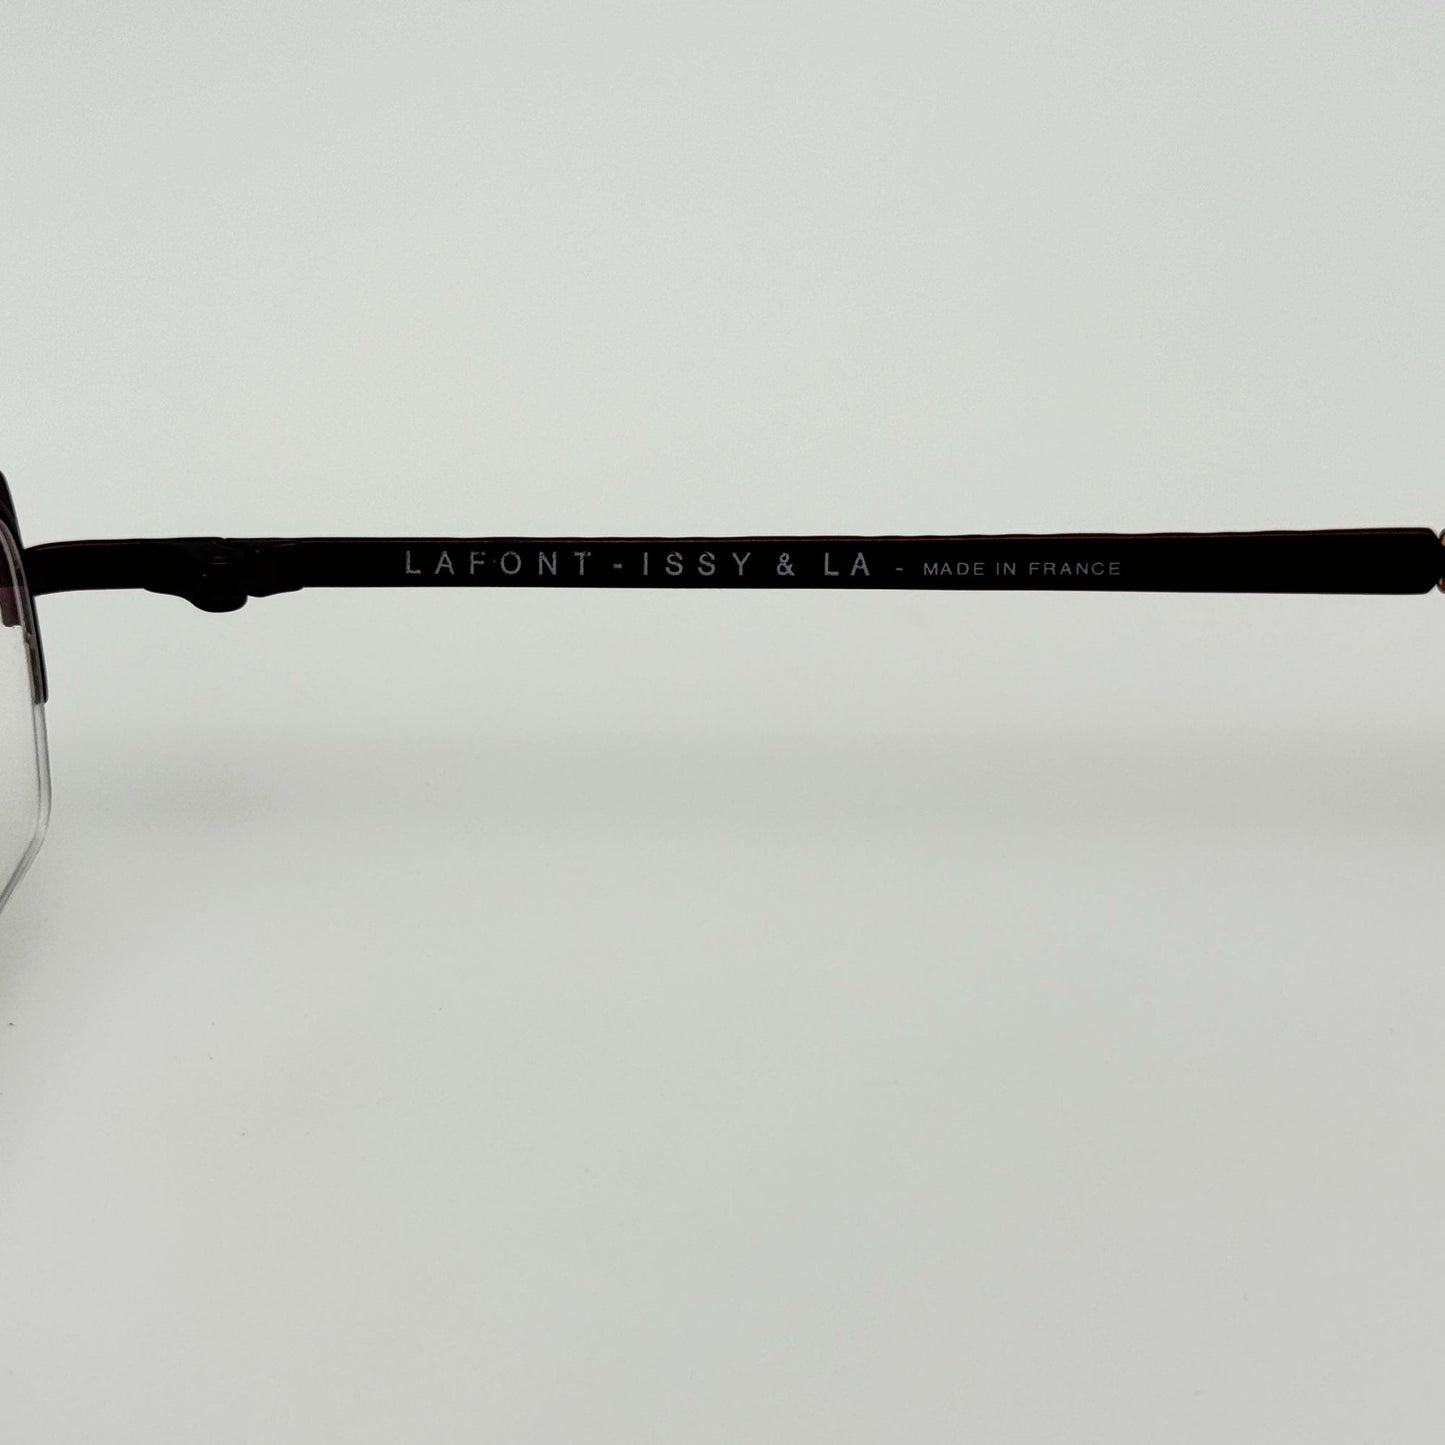 Jean Lafont Eyeglasses Eye Glasses Frames Tania 671 France 52-16-135